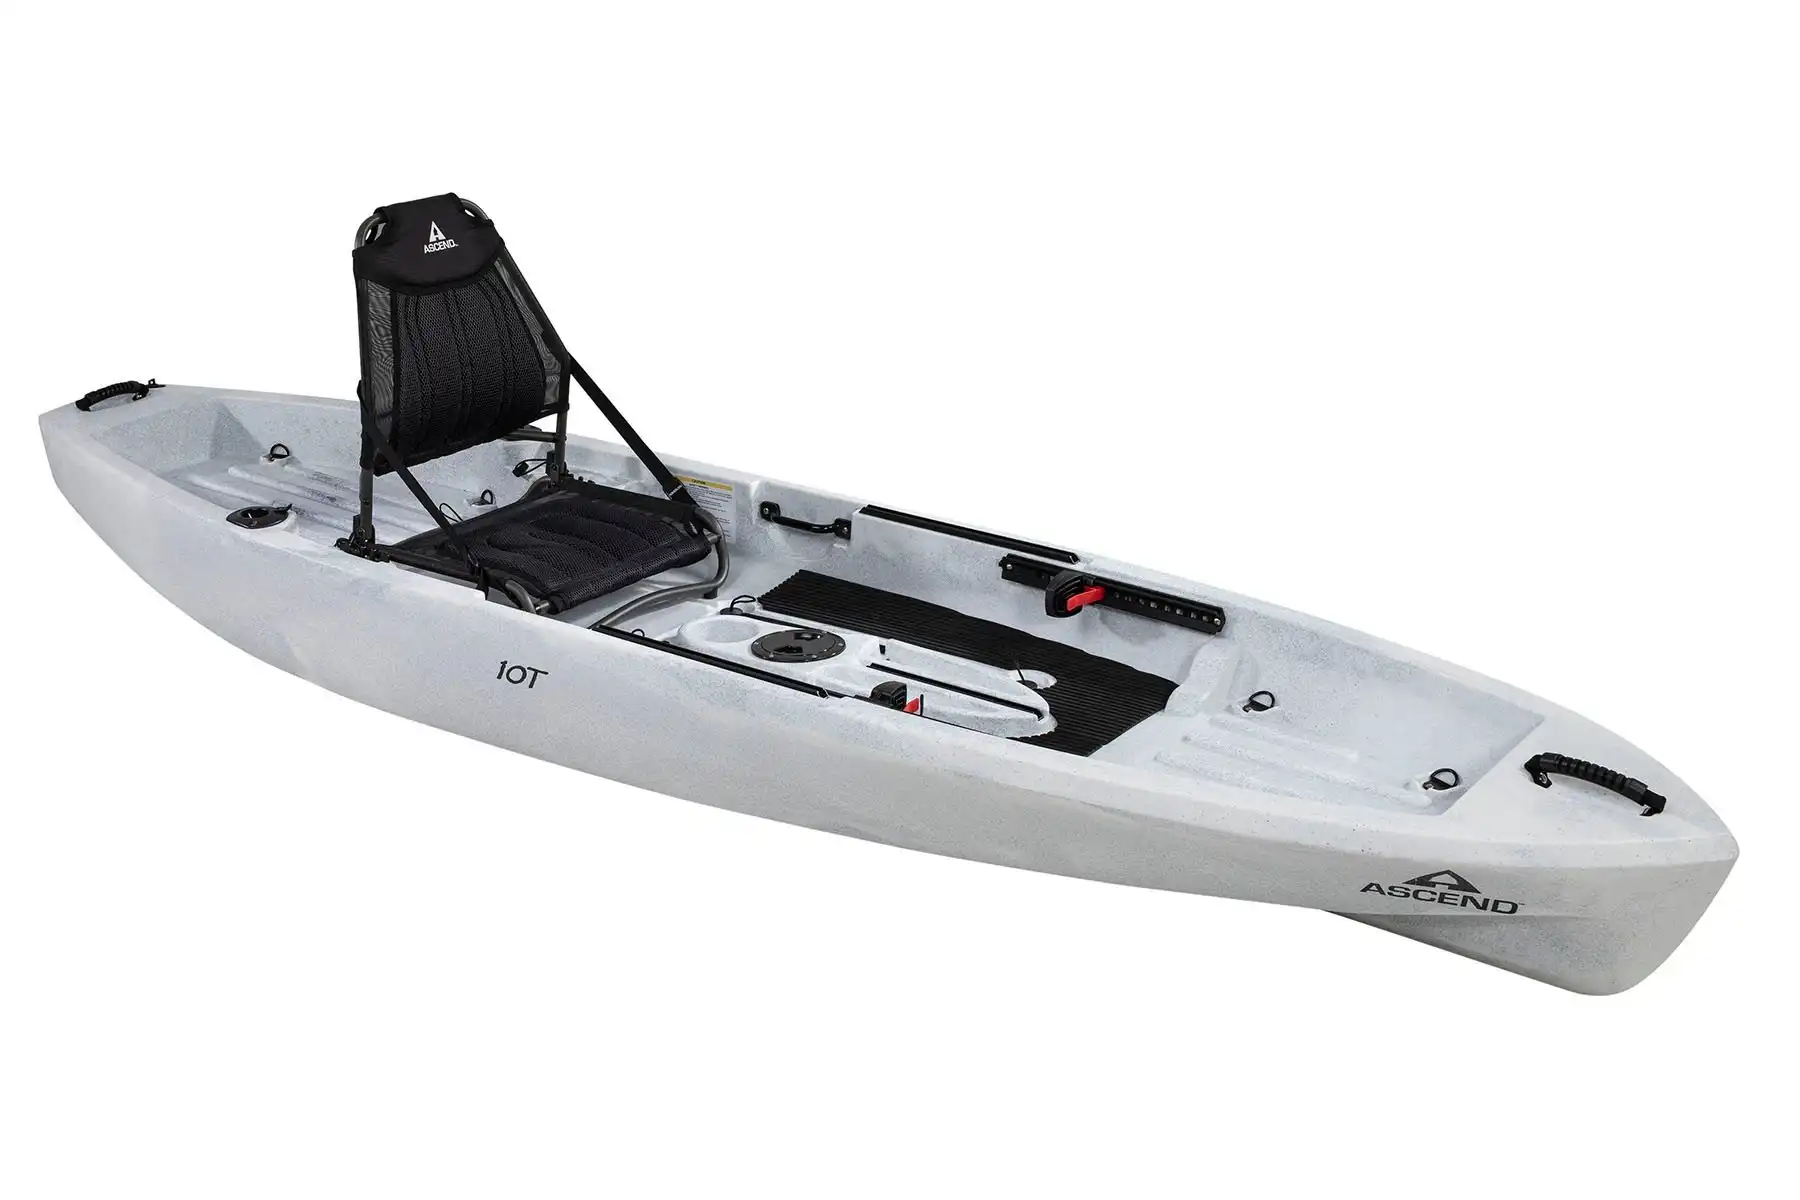 Ascend 10T Sit-On-Top Fishing Kayak